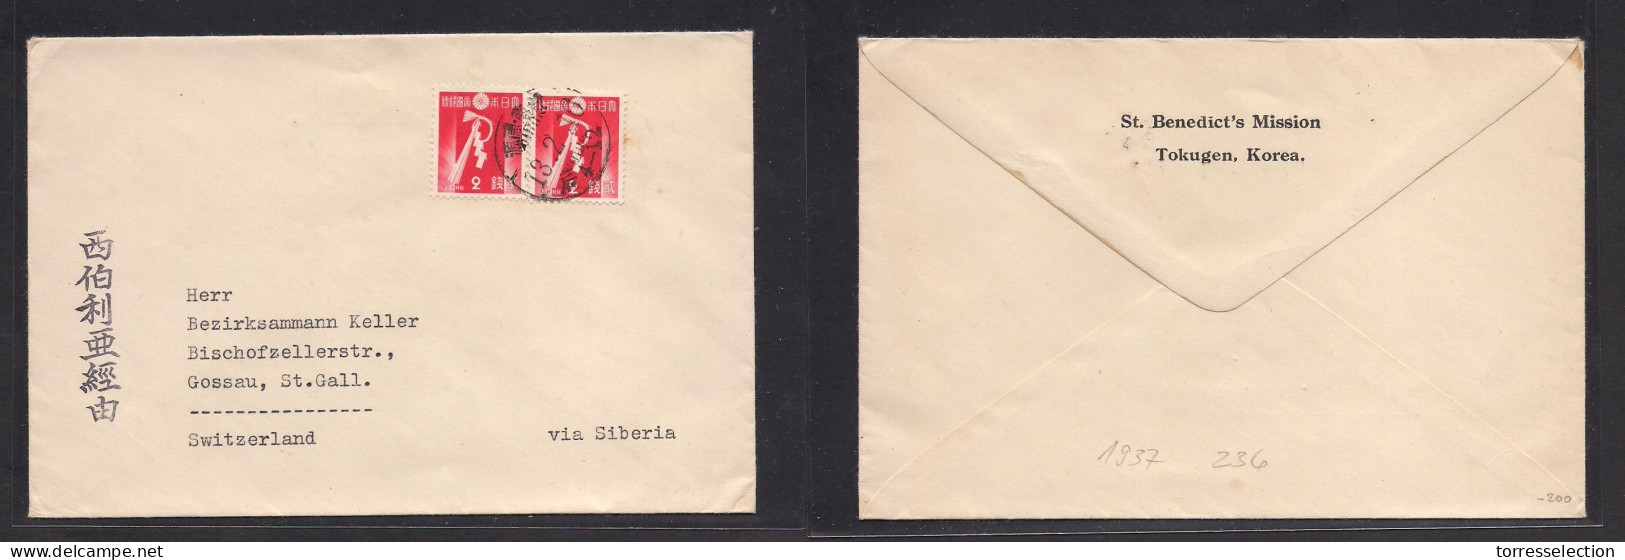 KOREA. 1937 (16 Feb) Tokugen - Switzerland, St. Gallen. Japanese Occup Via Siberia. Multifkd Japanese Stamps Envelope, C - Corea (...-1945)